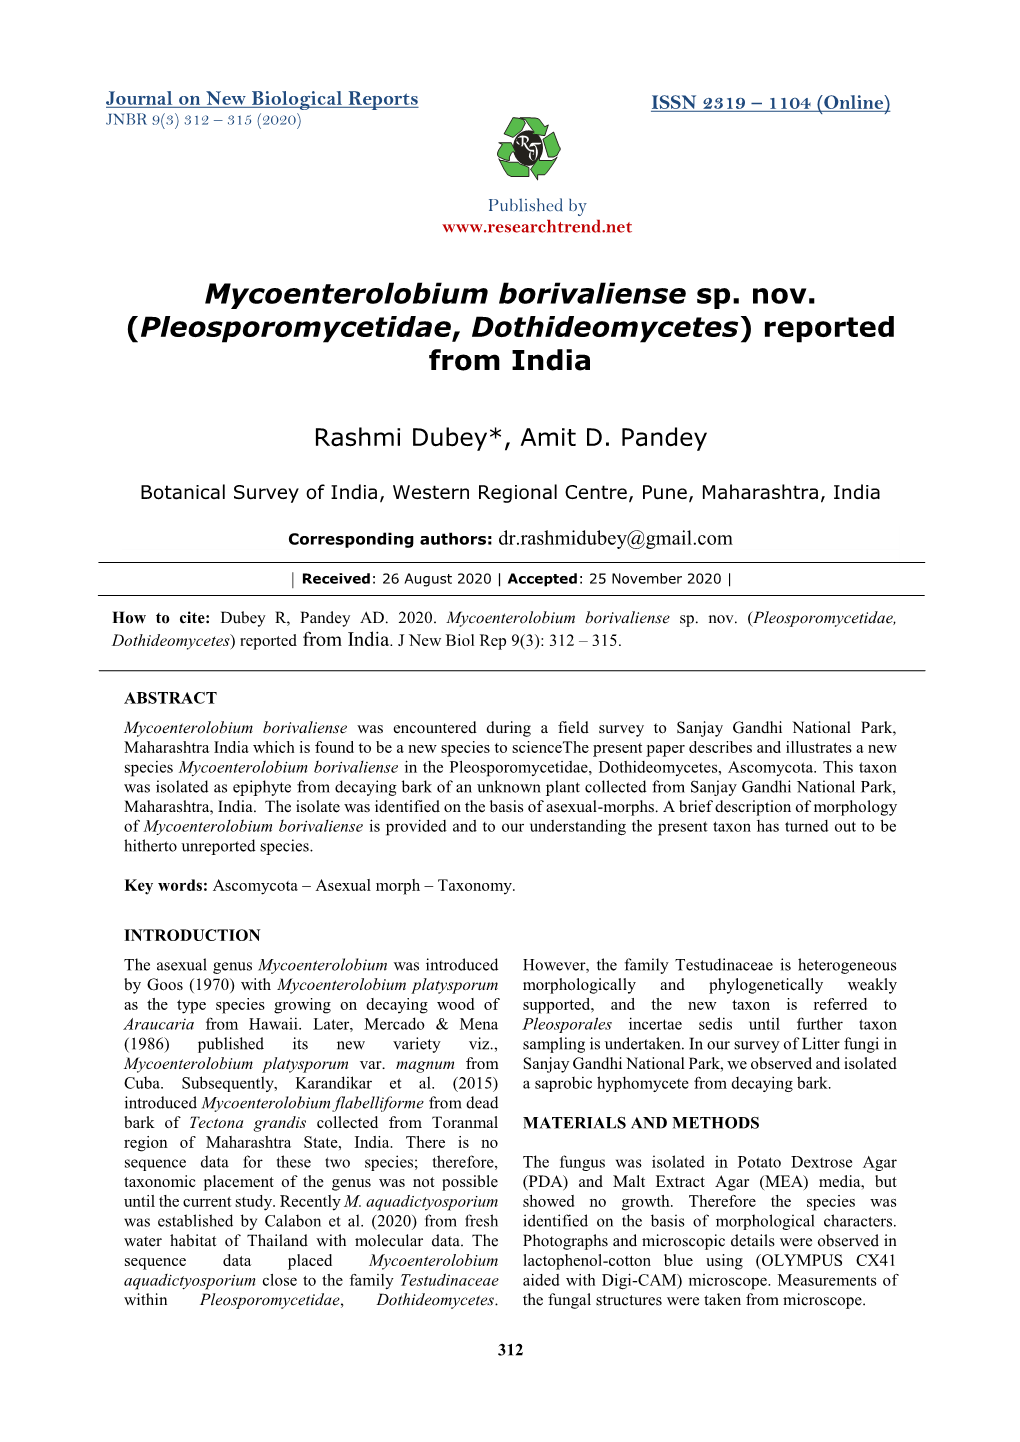 Mycoenterolobium Borivaliense Sp. Nov. (Pleosporomycetidae, Dothideomycetes) Reported from India